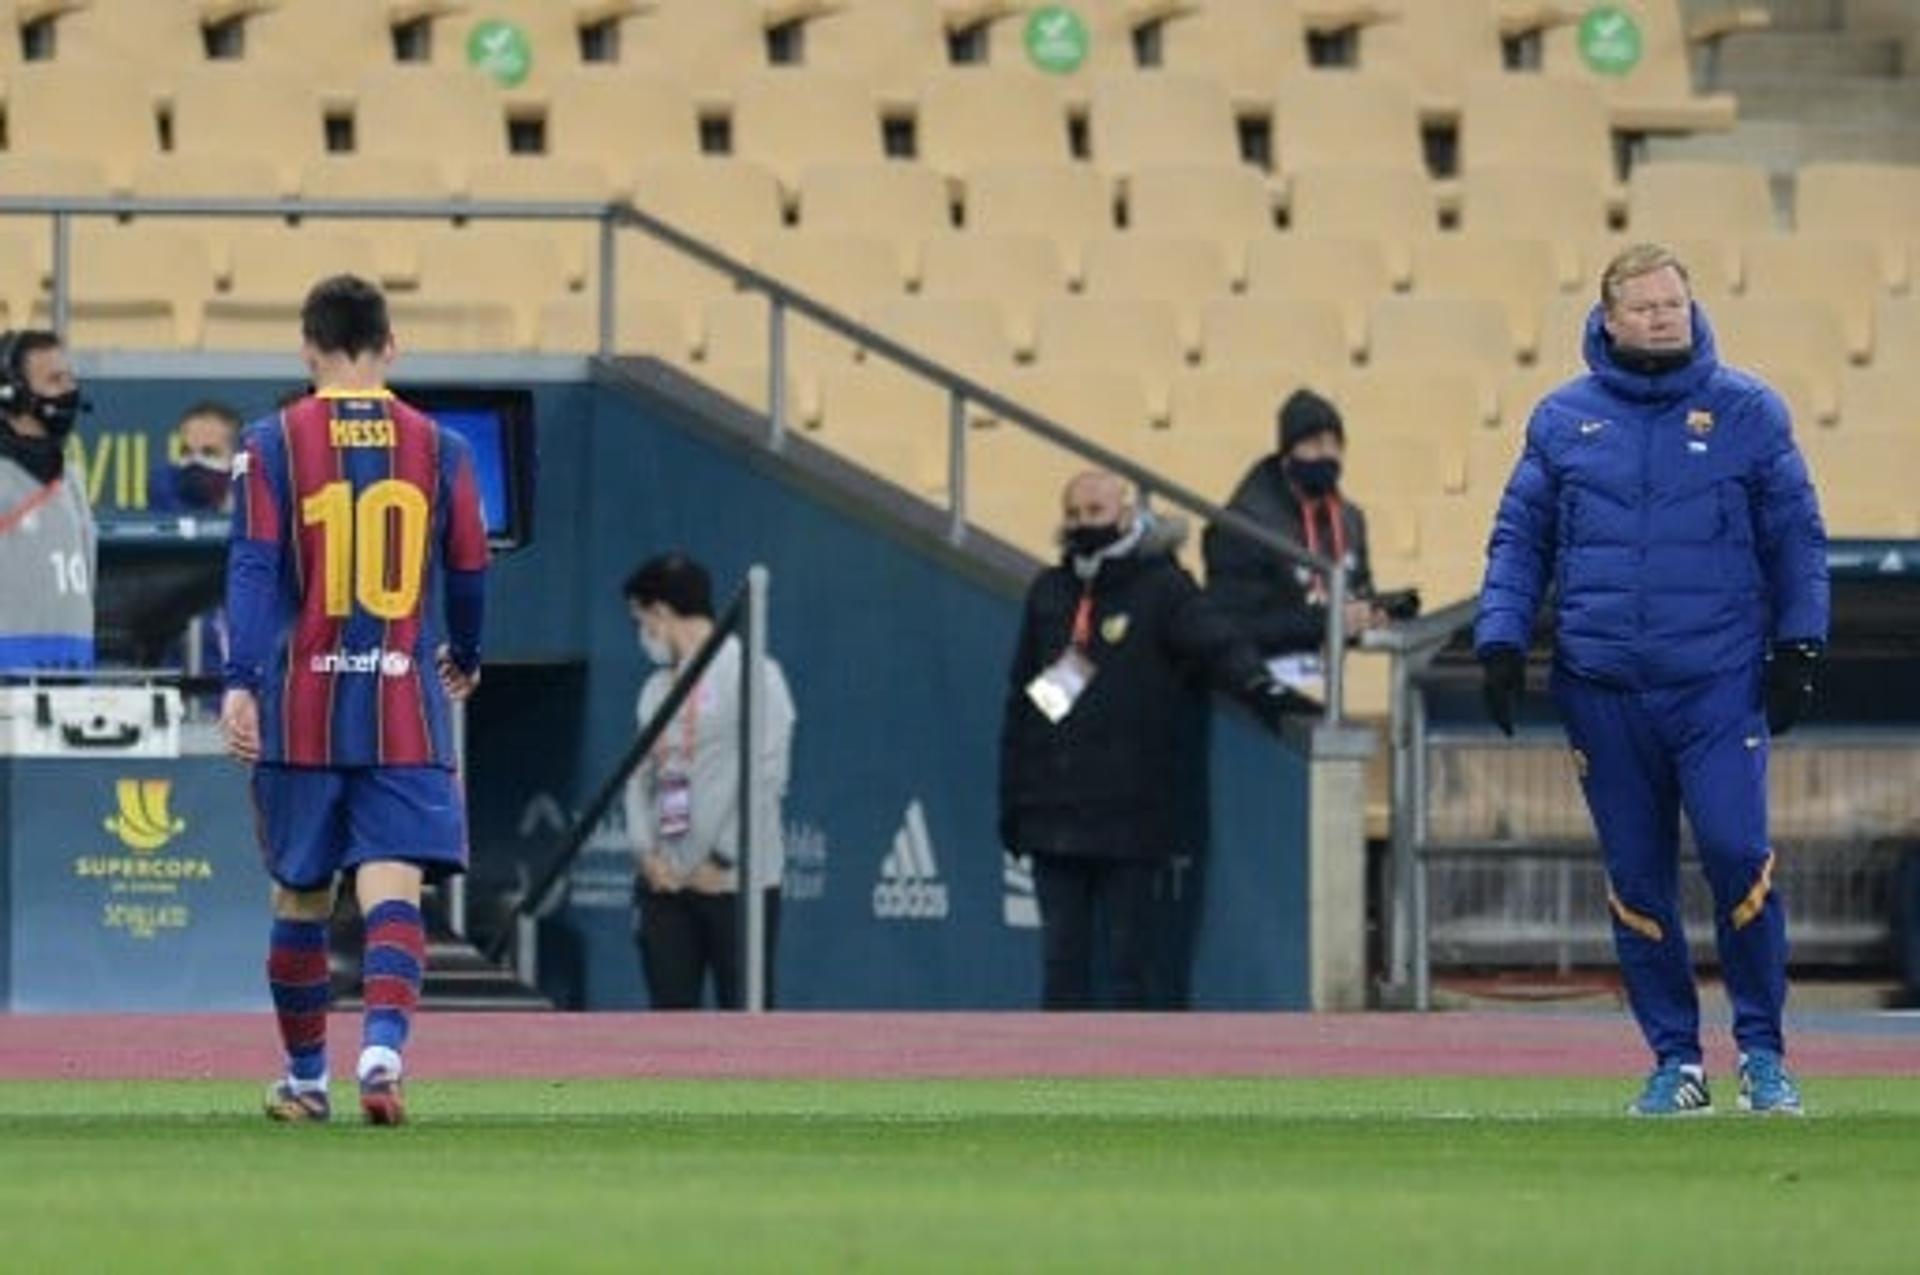 Messi - Barcelona